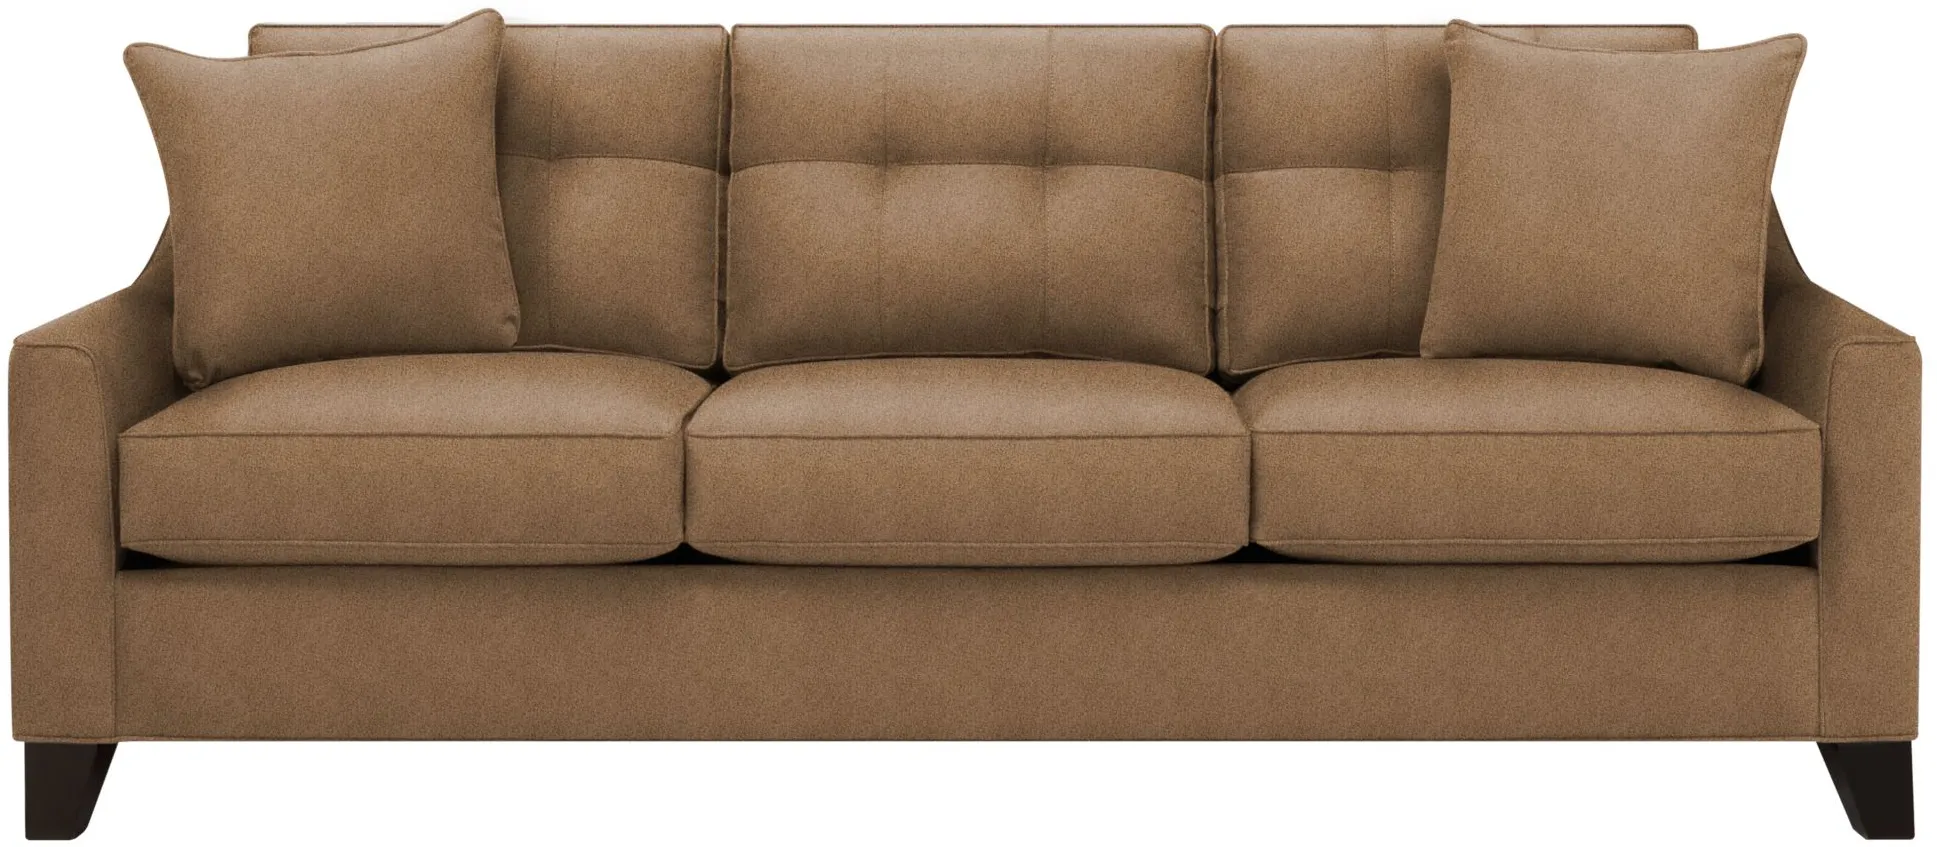 Carmine Queen Sleeper Sofa in Suede so Soft Khaki by H.M. Richards